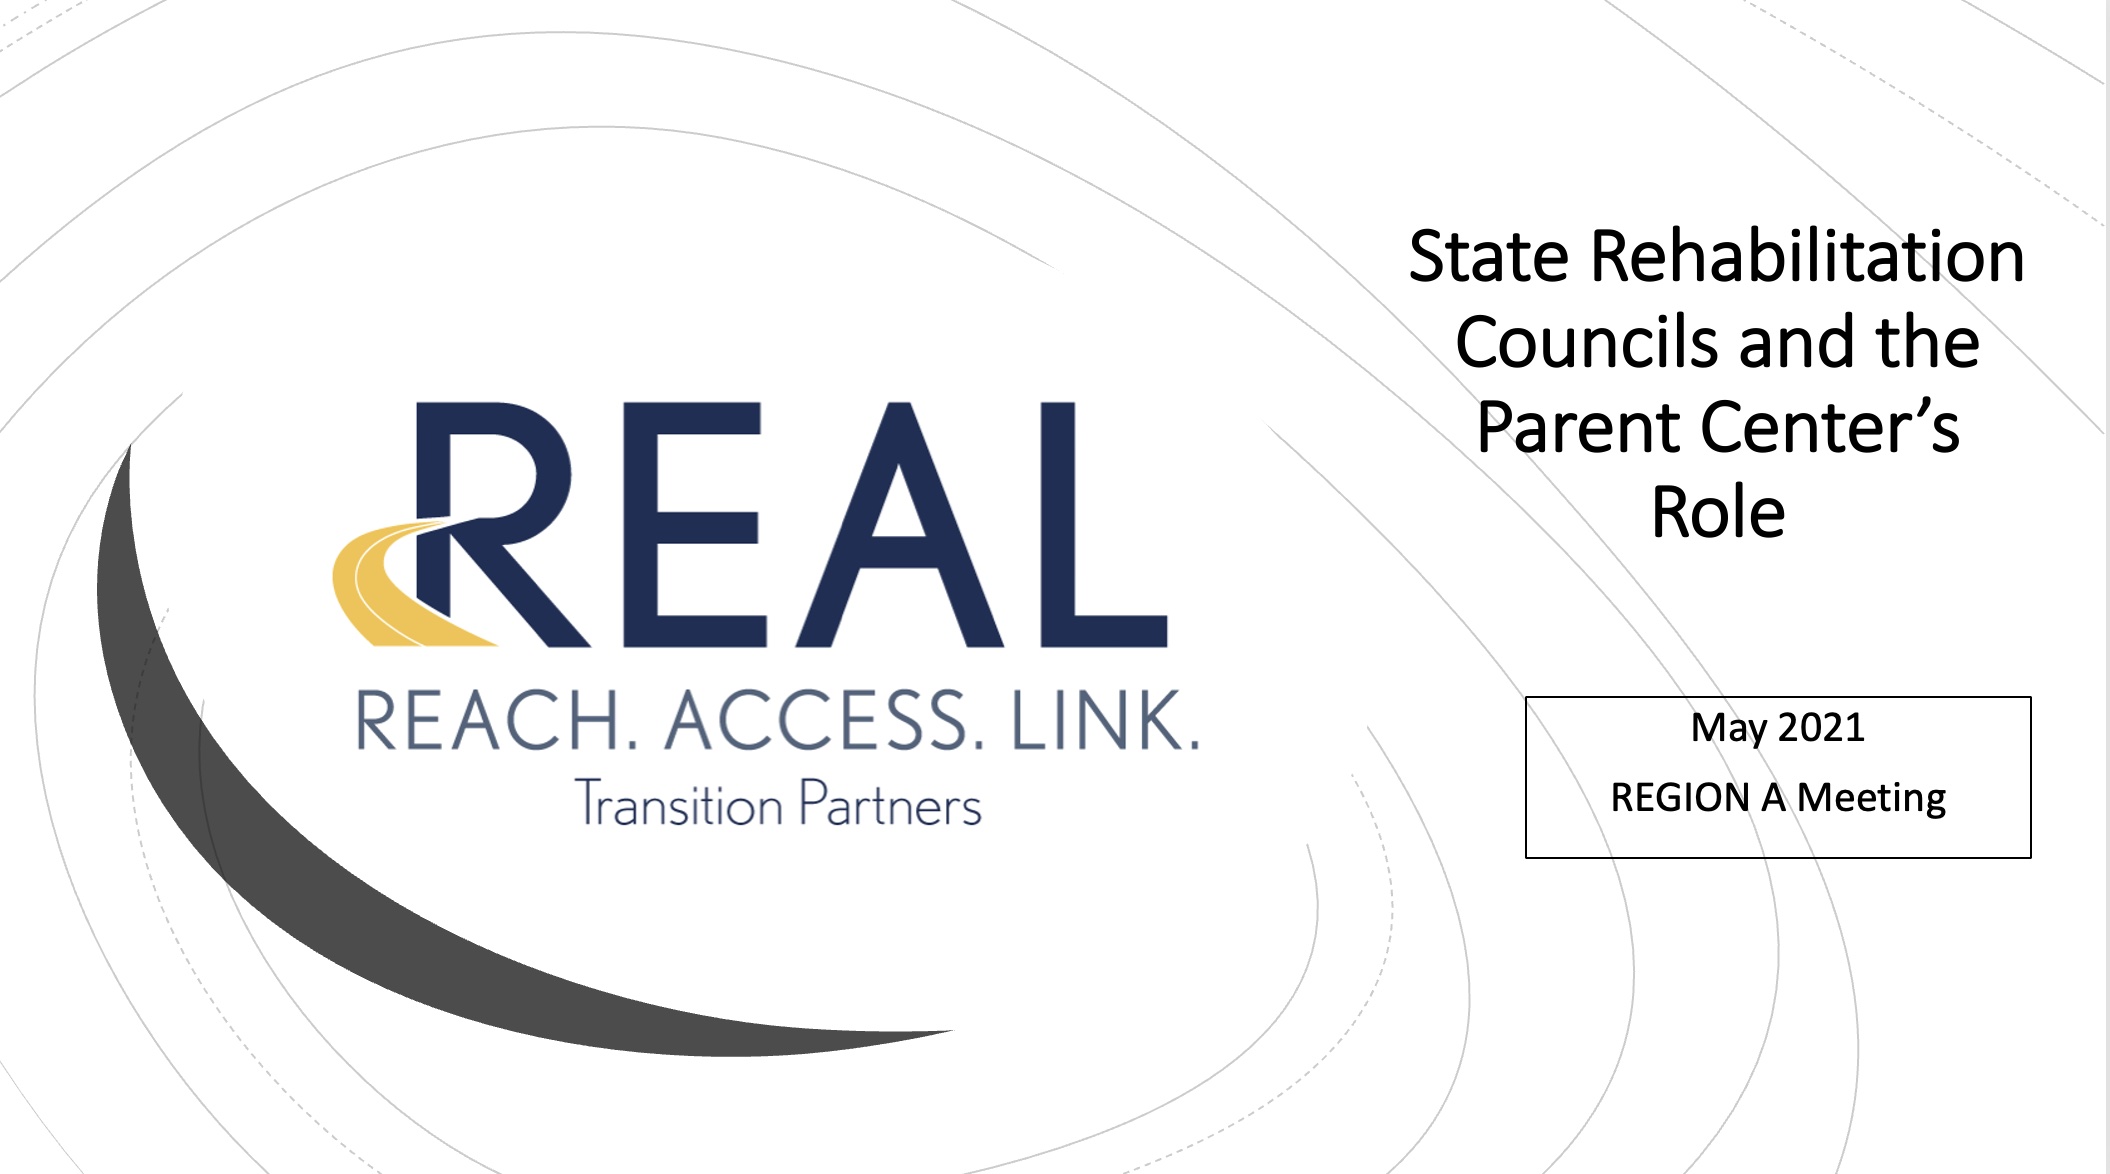 State Rehabilitative Councils and the Parent Center's Role webinar